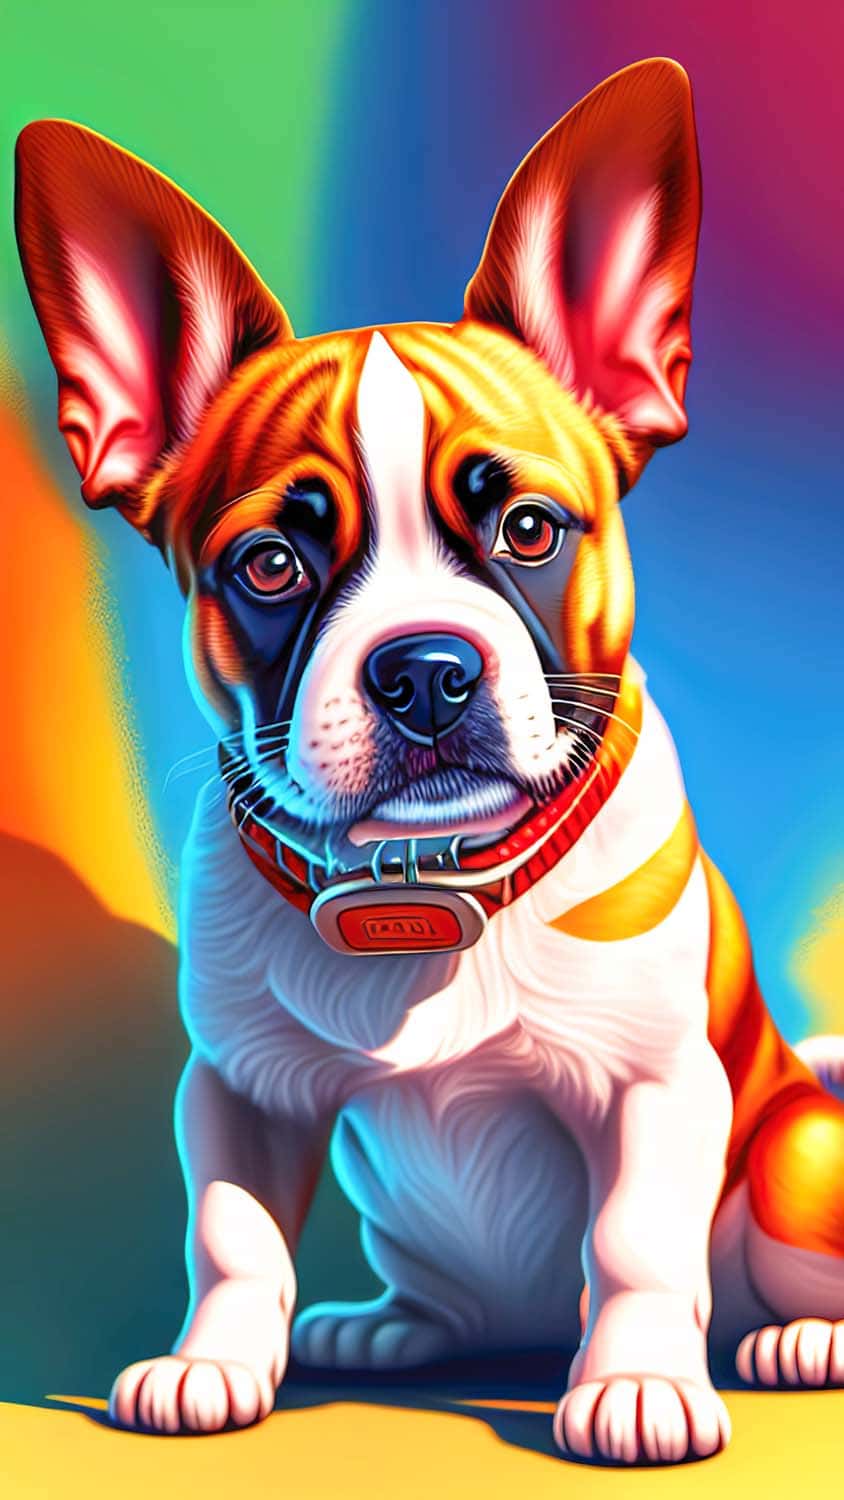 French Bulldog iPhone Wallpaper HD